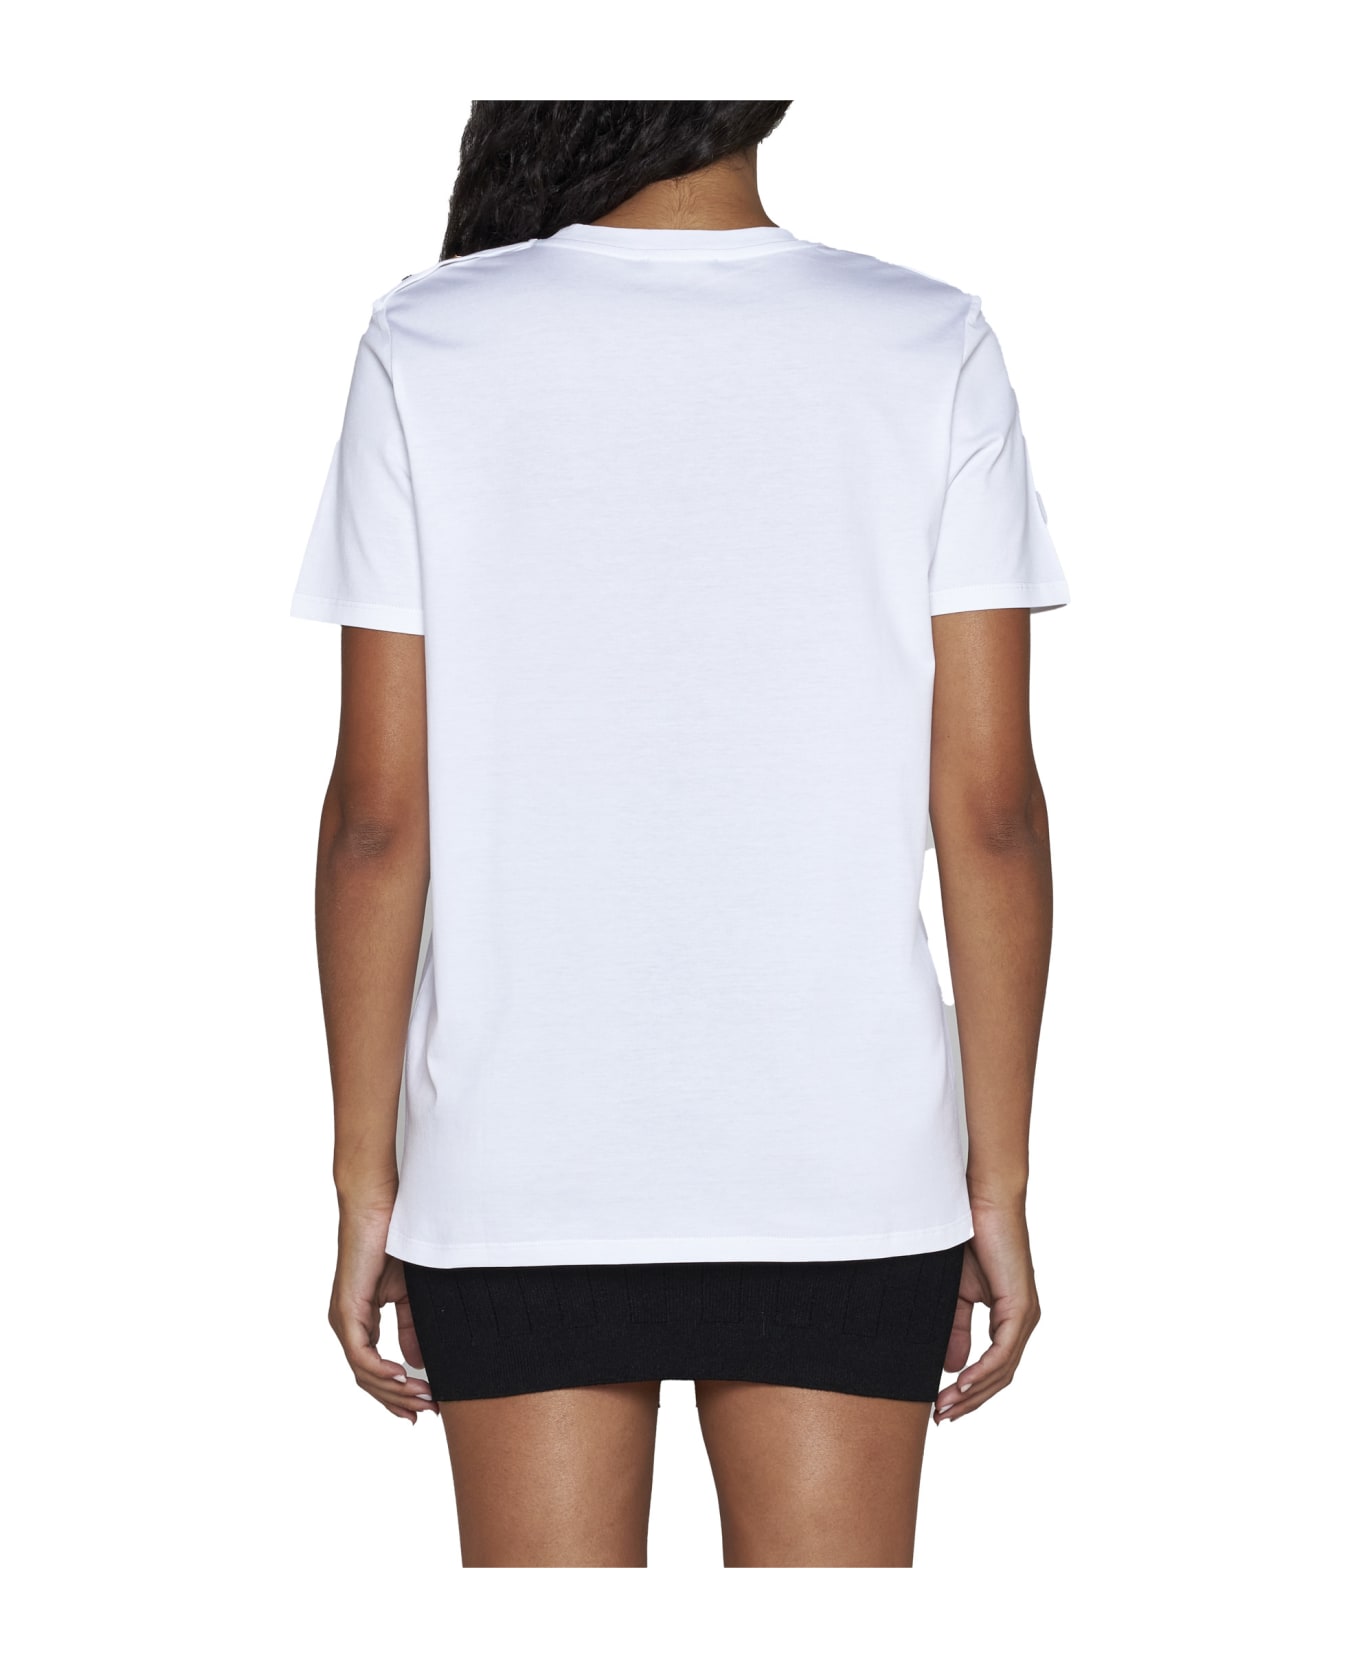 Balmain T-Shirt - White